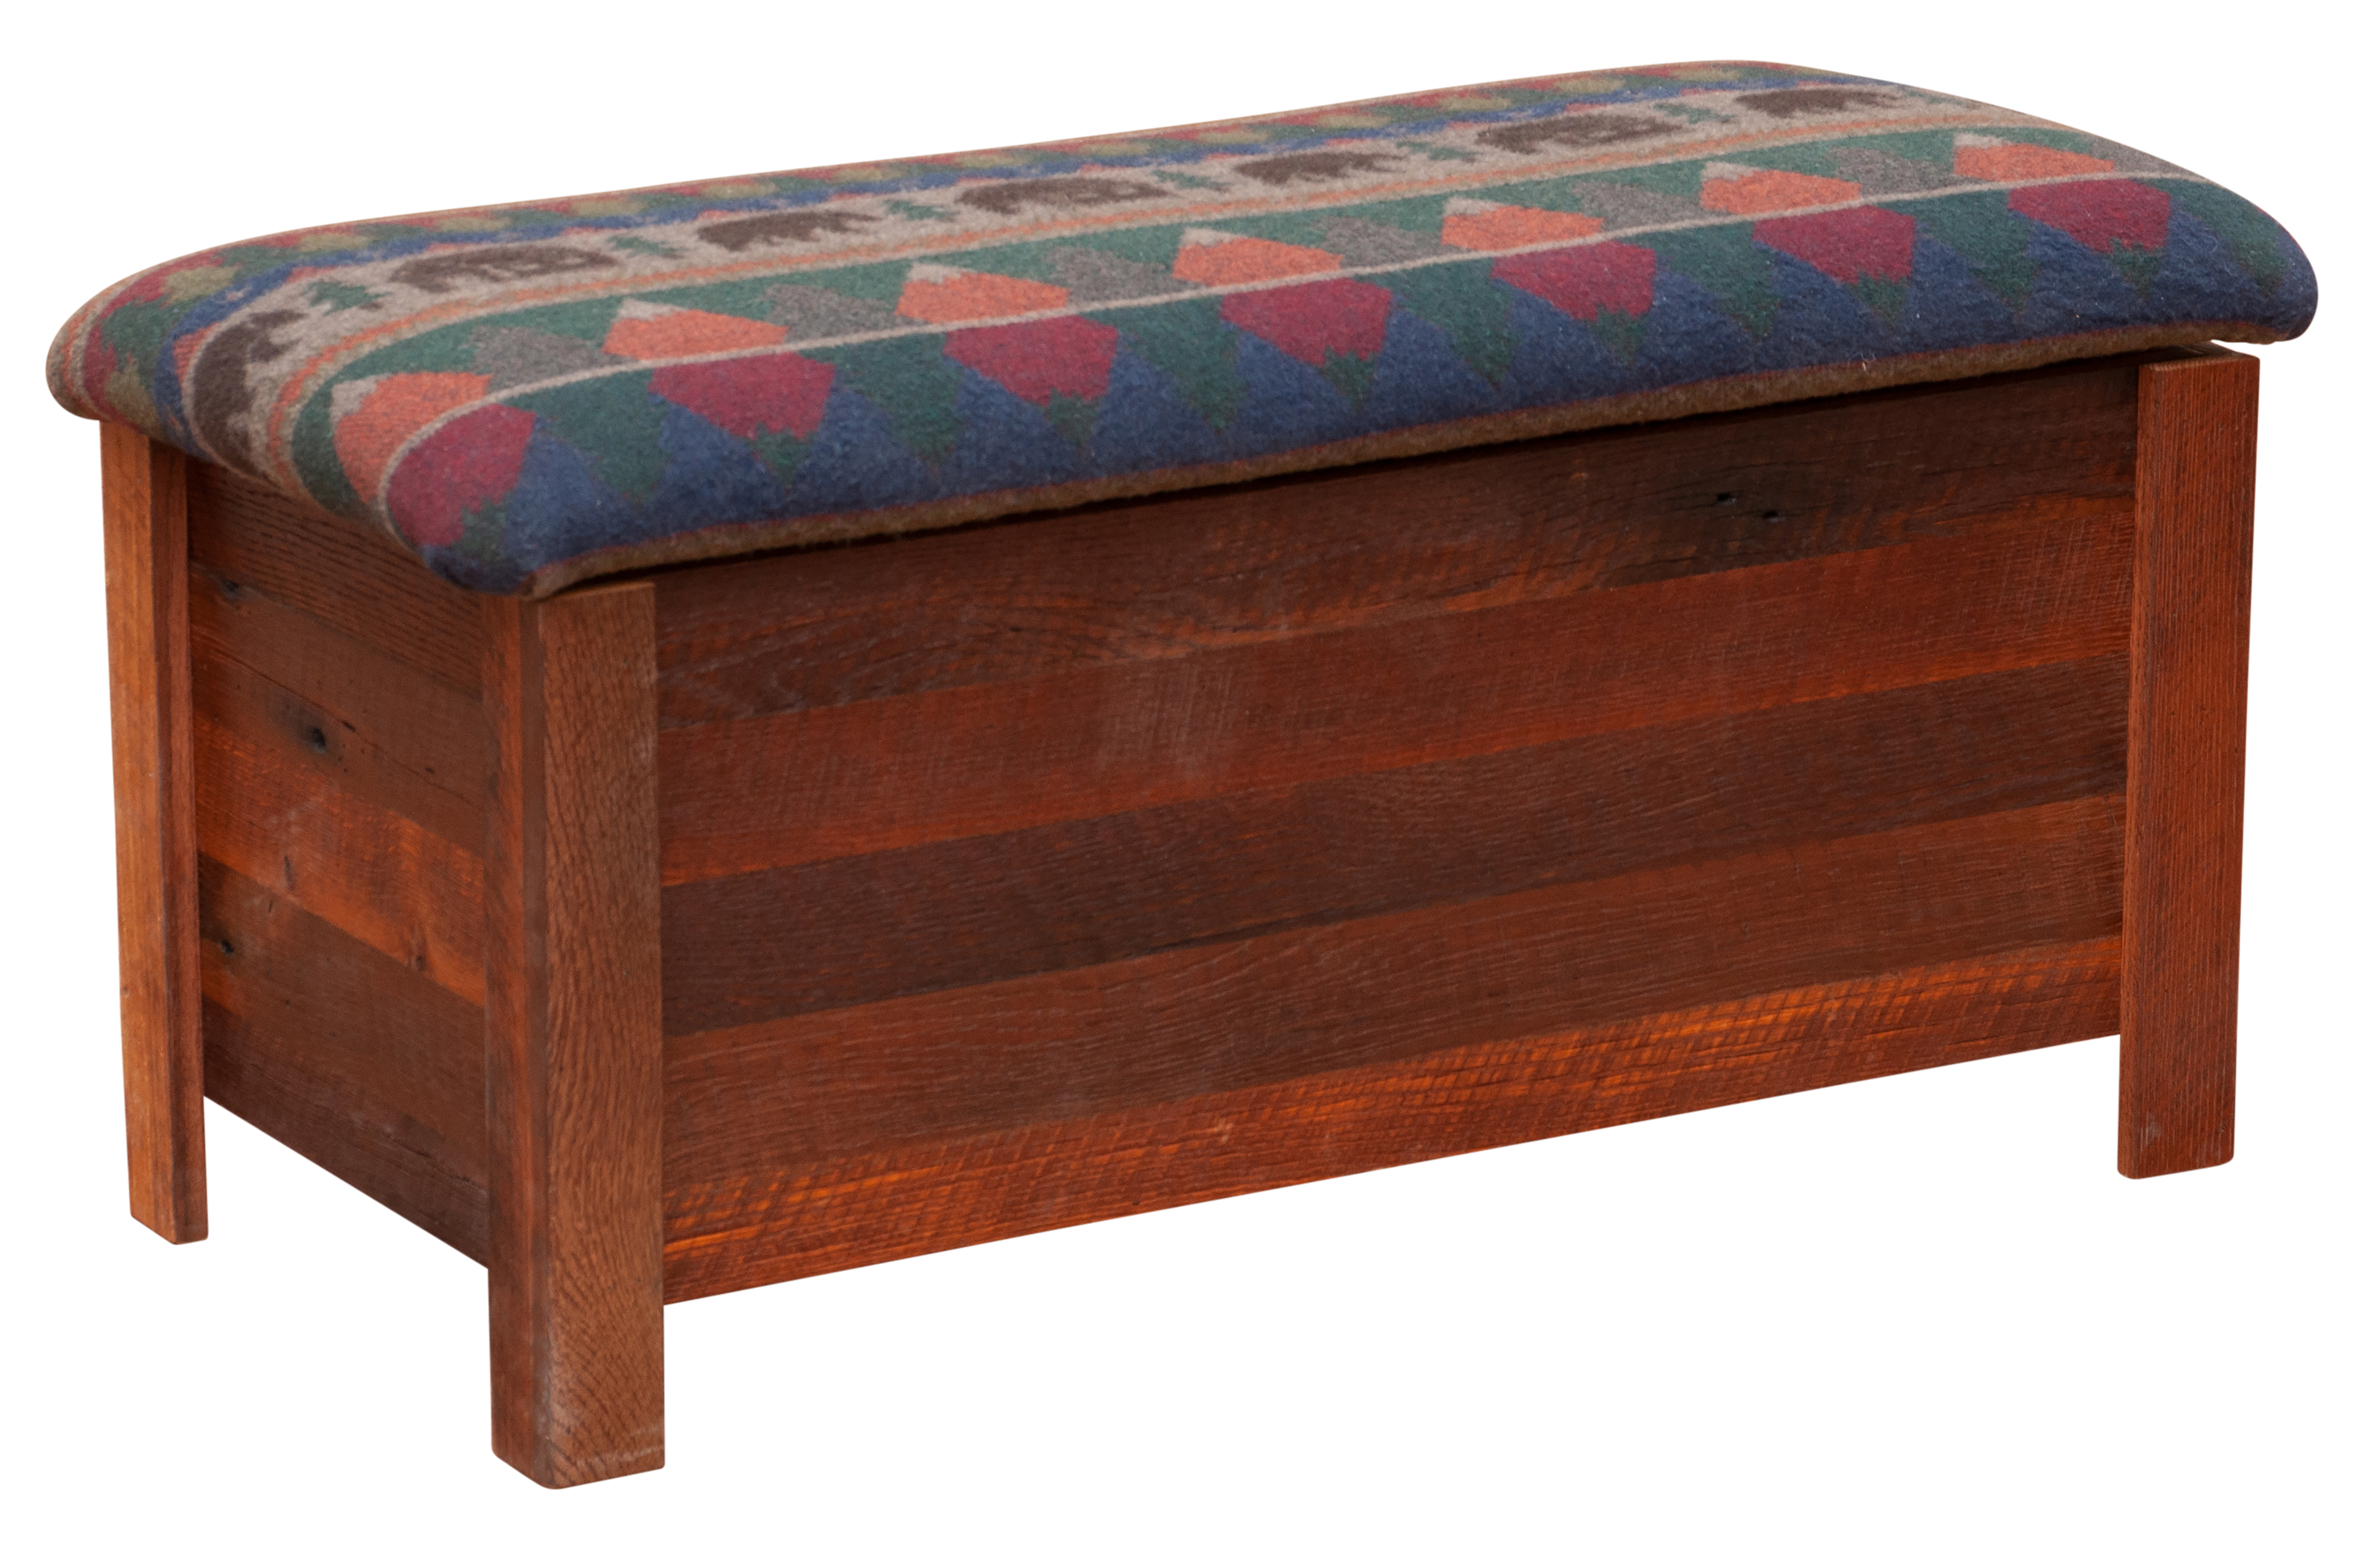 Upholstered Blanket Chest - Fireside Lodge Furniture Company